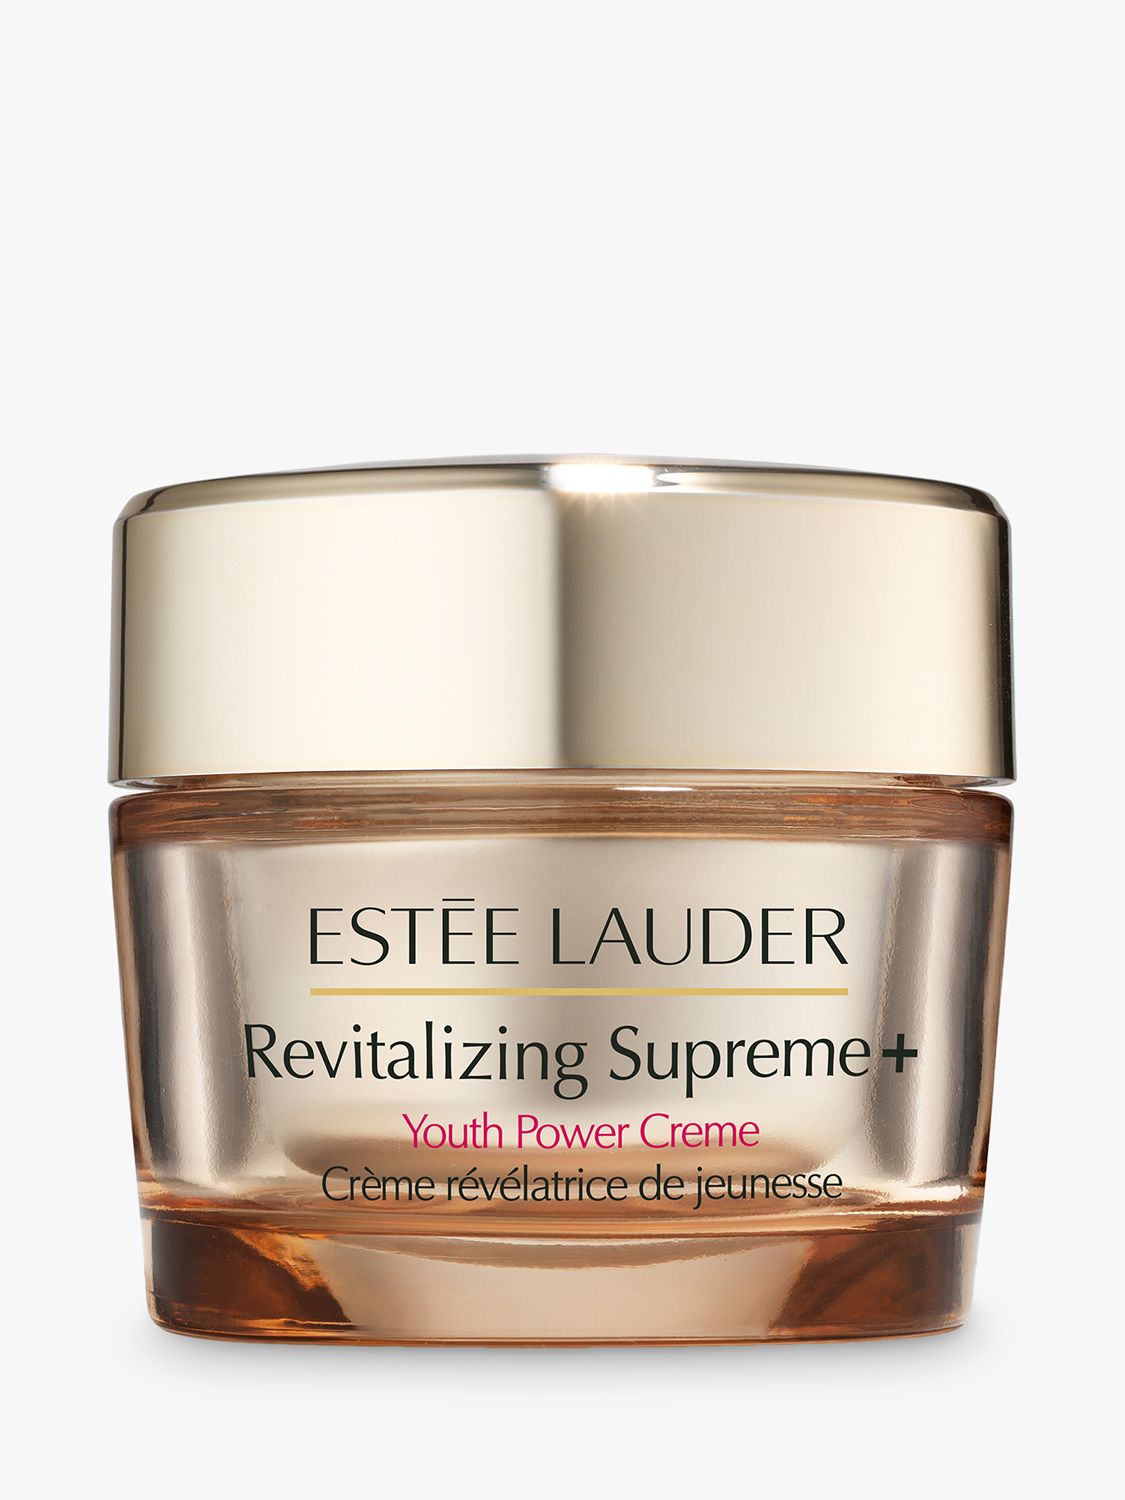 Estée Lauder Revitalizing Supreme+ Youth Power Creme Moisturiser, 50ml